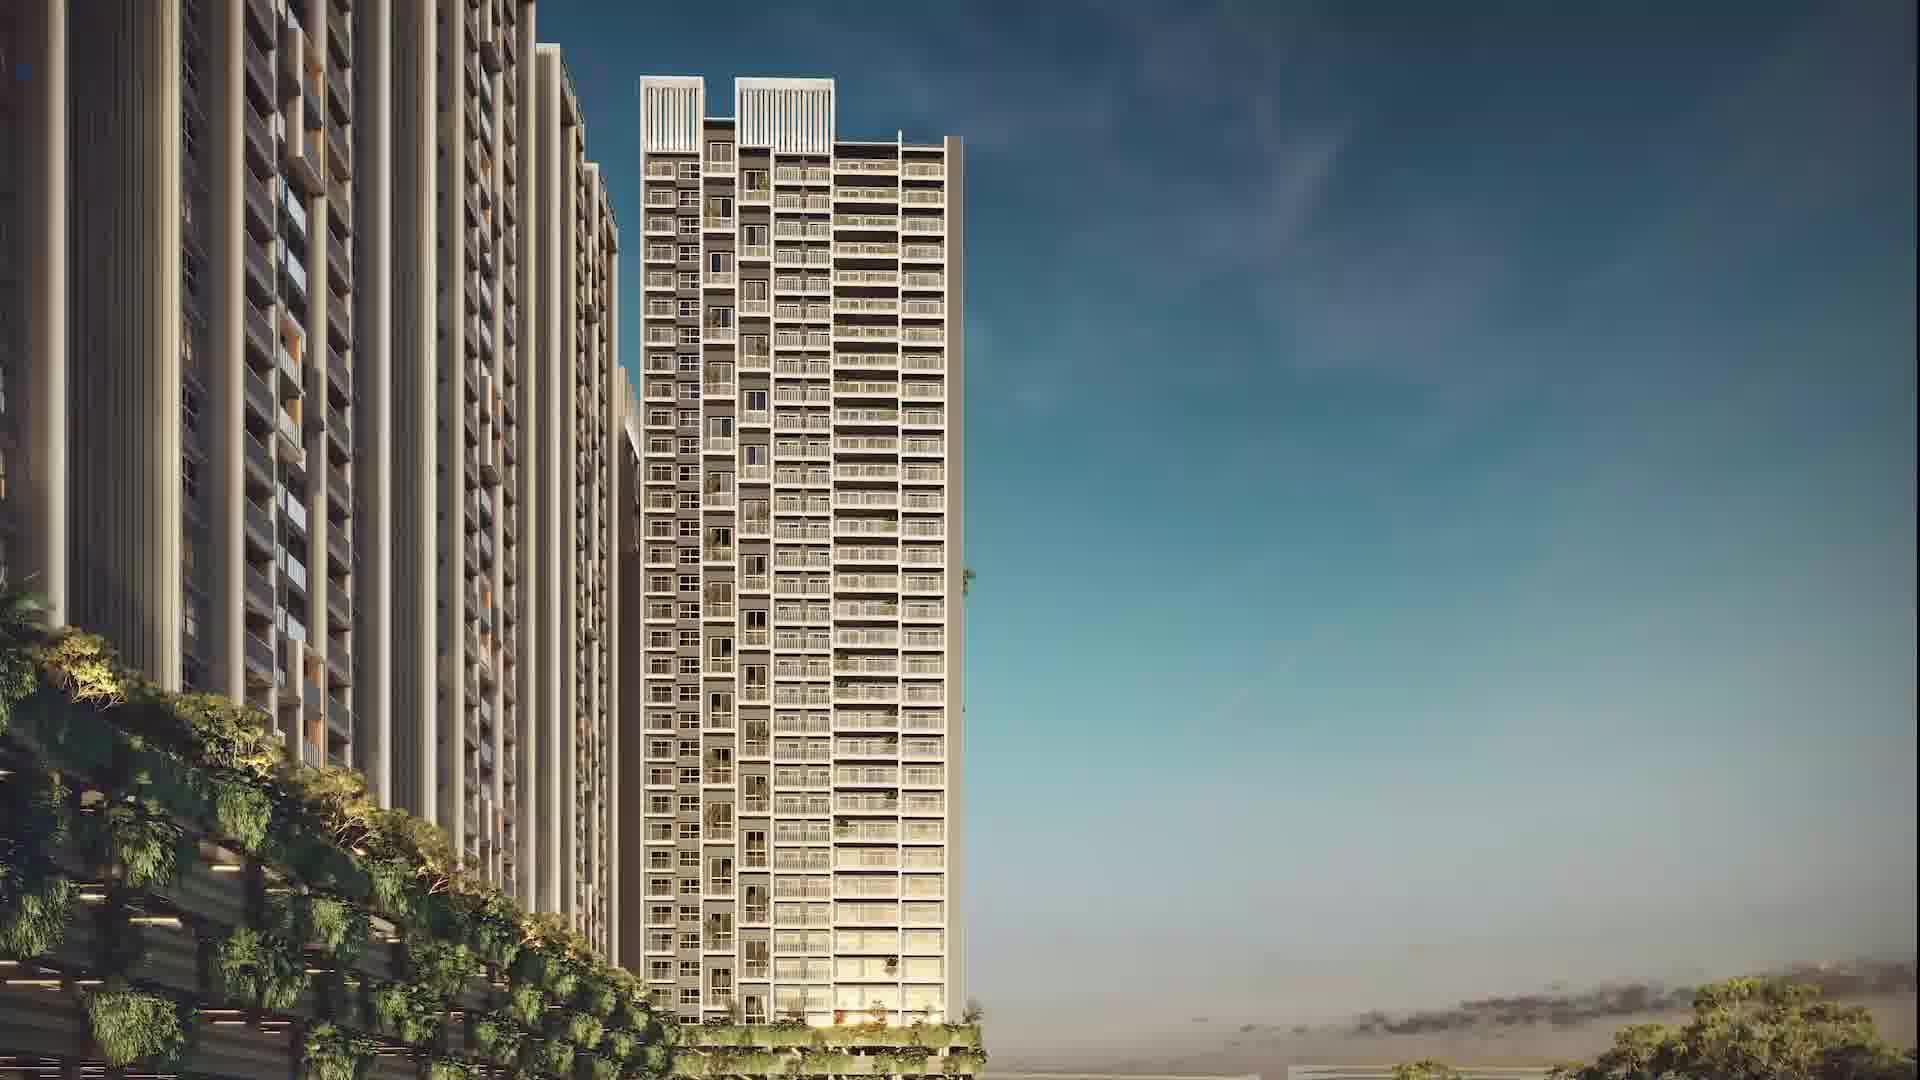 Rohan Housing Flats in Tathawade Pune